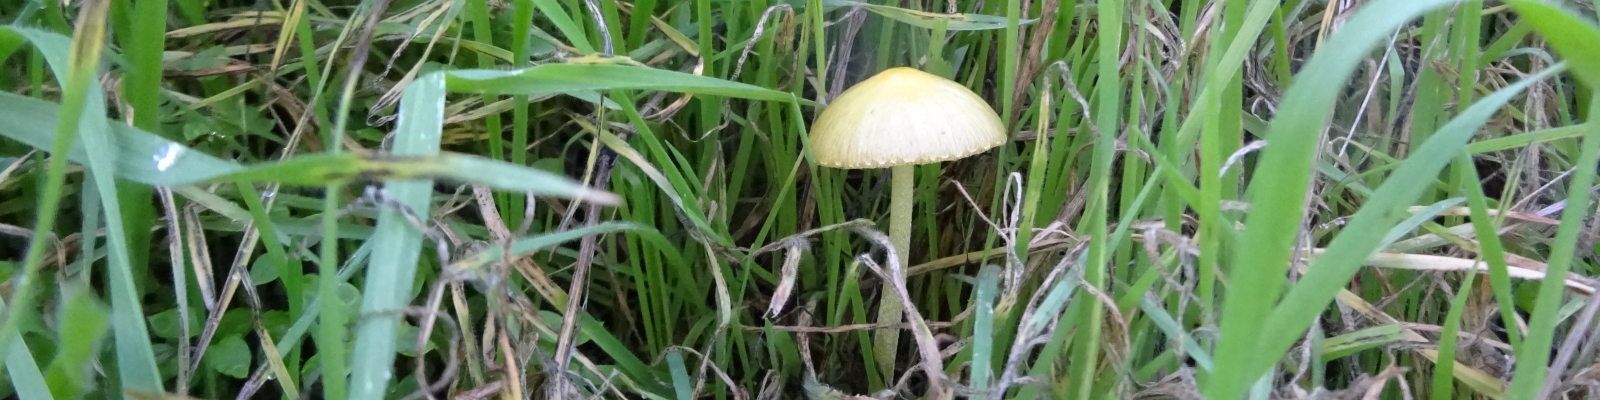 Tiny mushroom